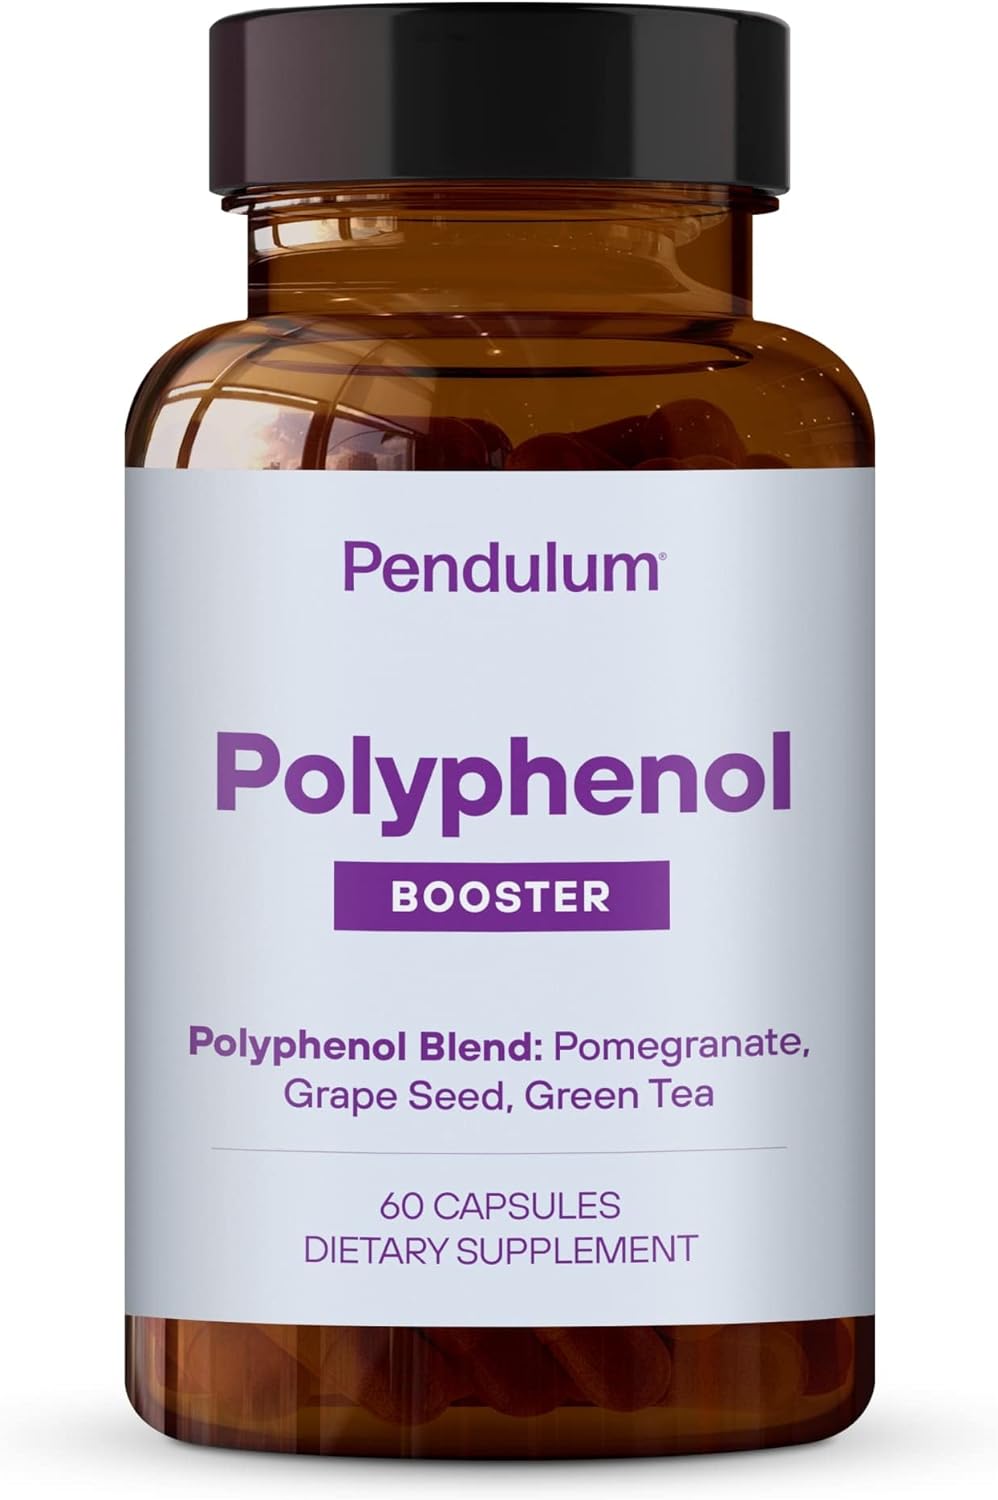 Pendulum Polyphenol Booster